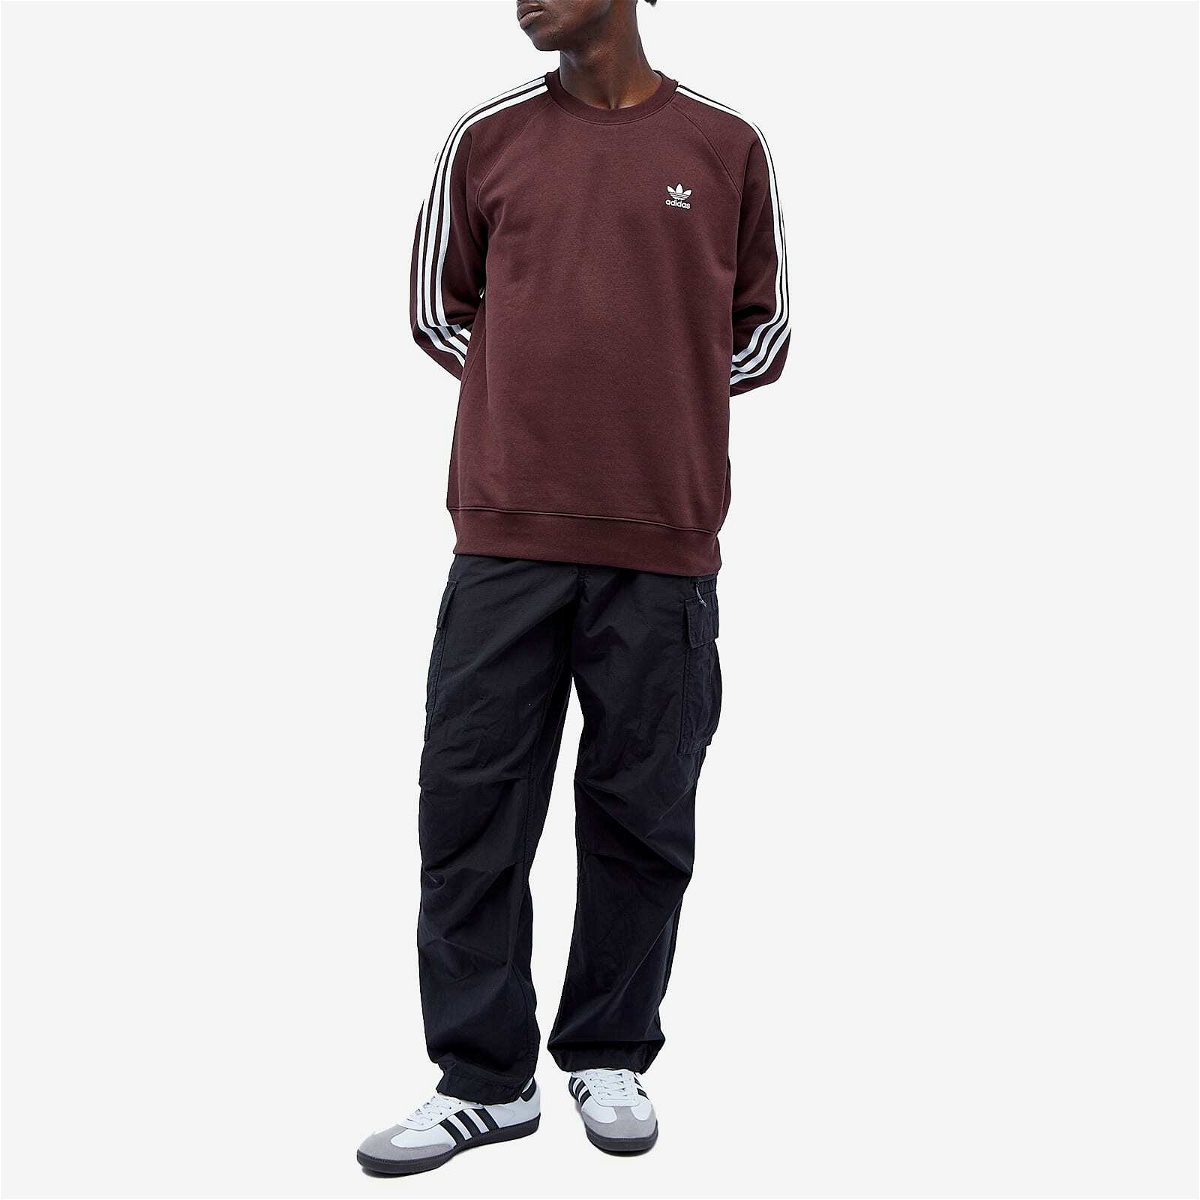 Adidas Men\'s 3 Stripe Crew Sweater in Shadow Brown adidas